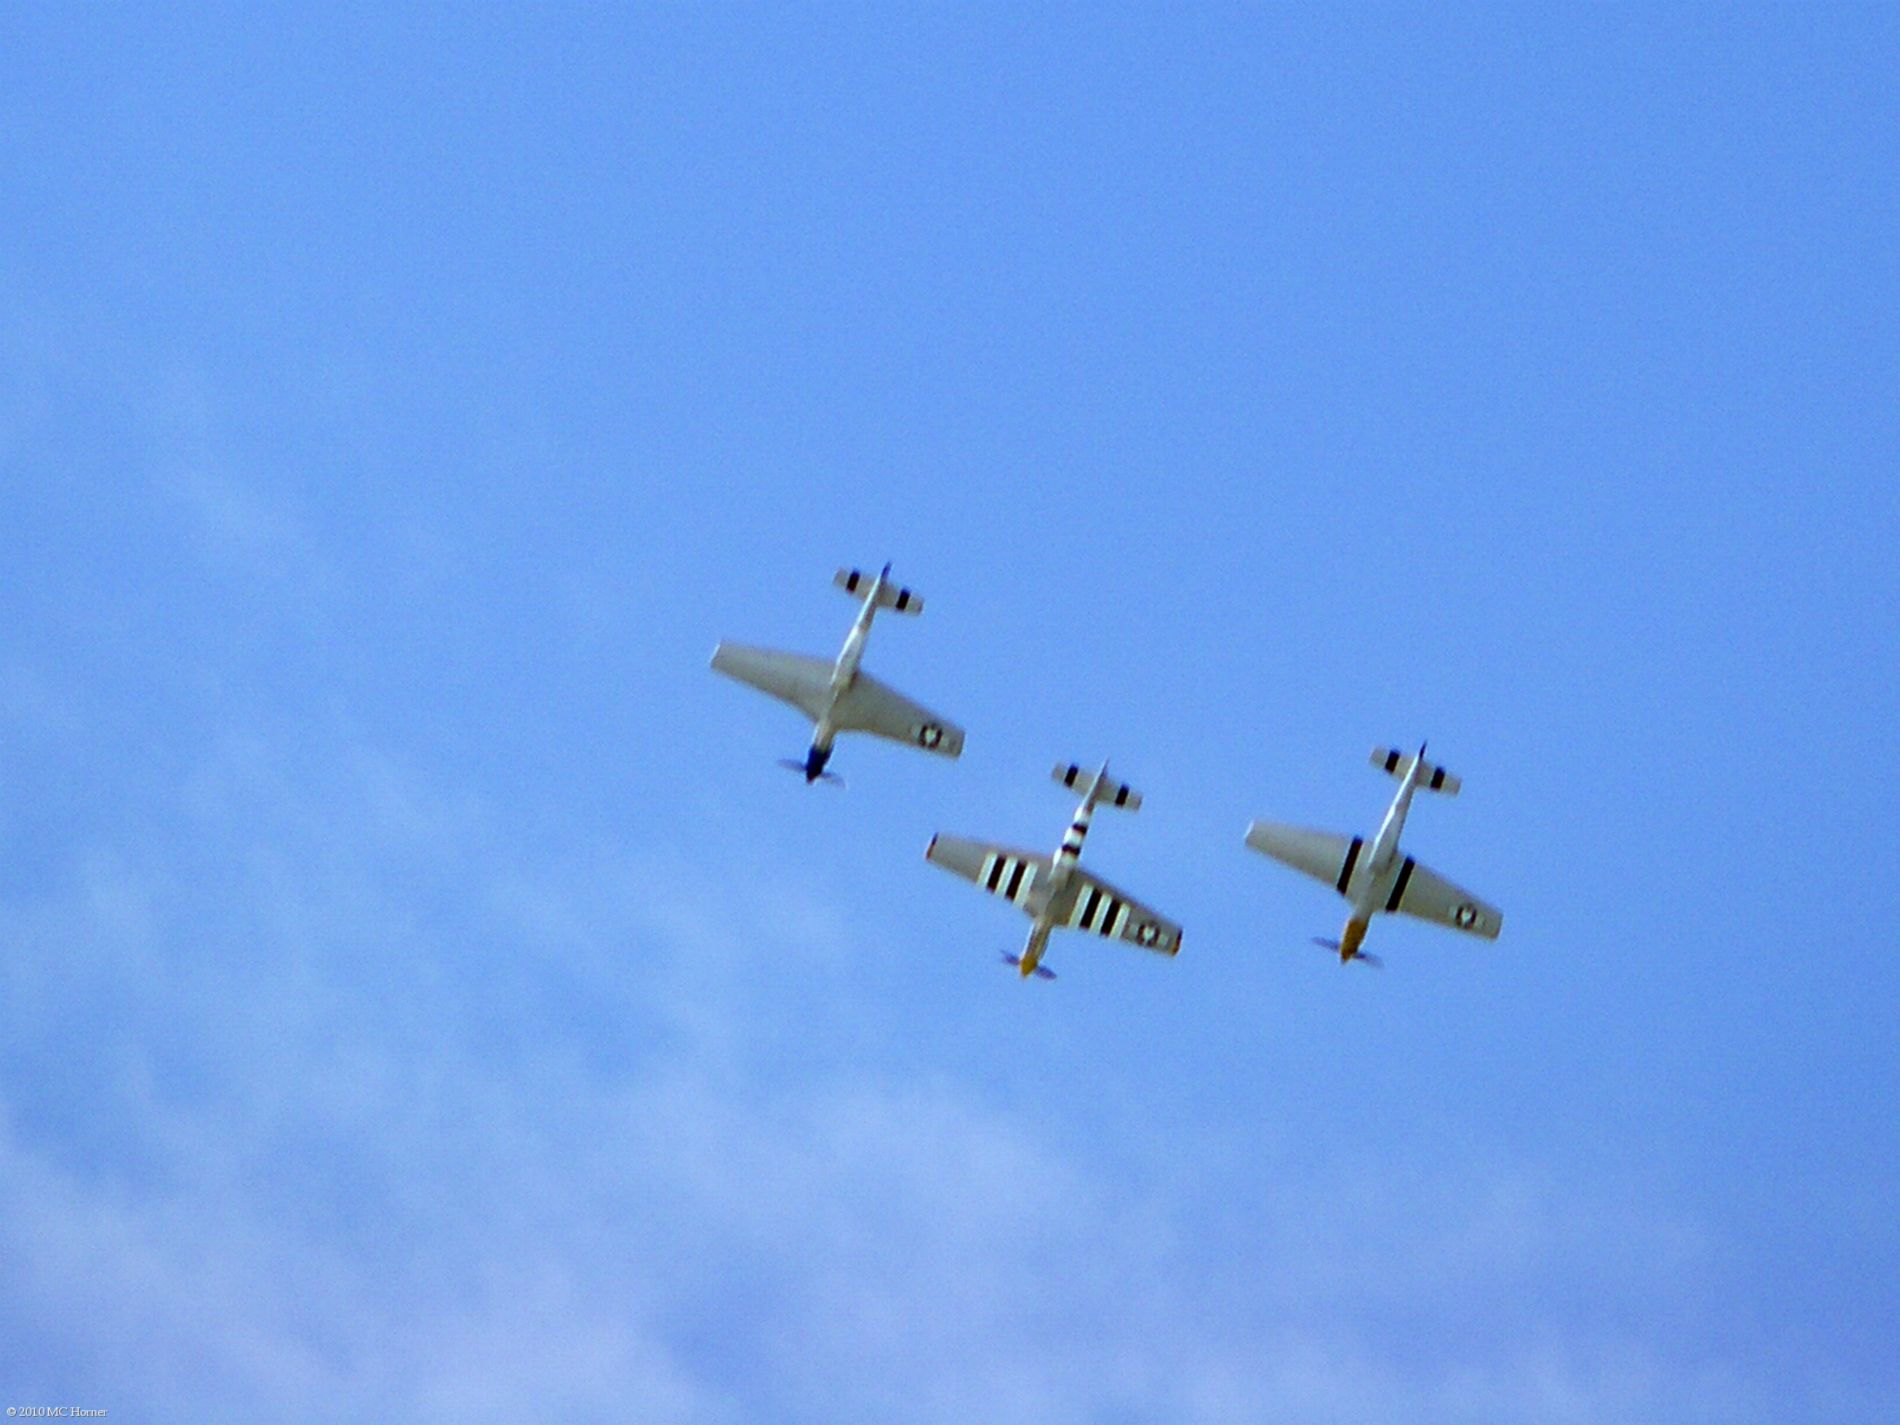 'The Horsemen' P-51 Aerobatic Team. These guys were amazing!